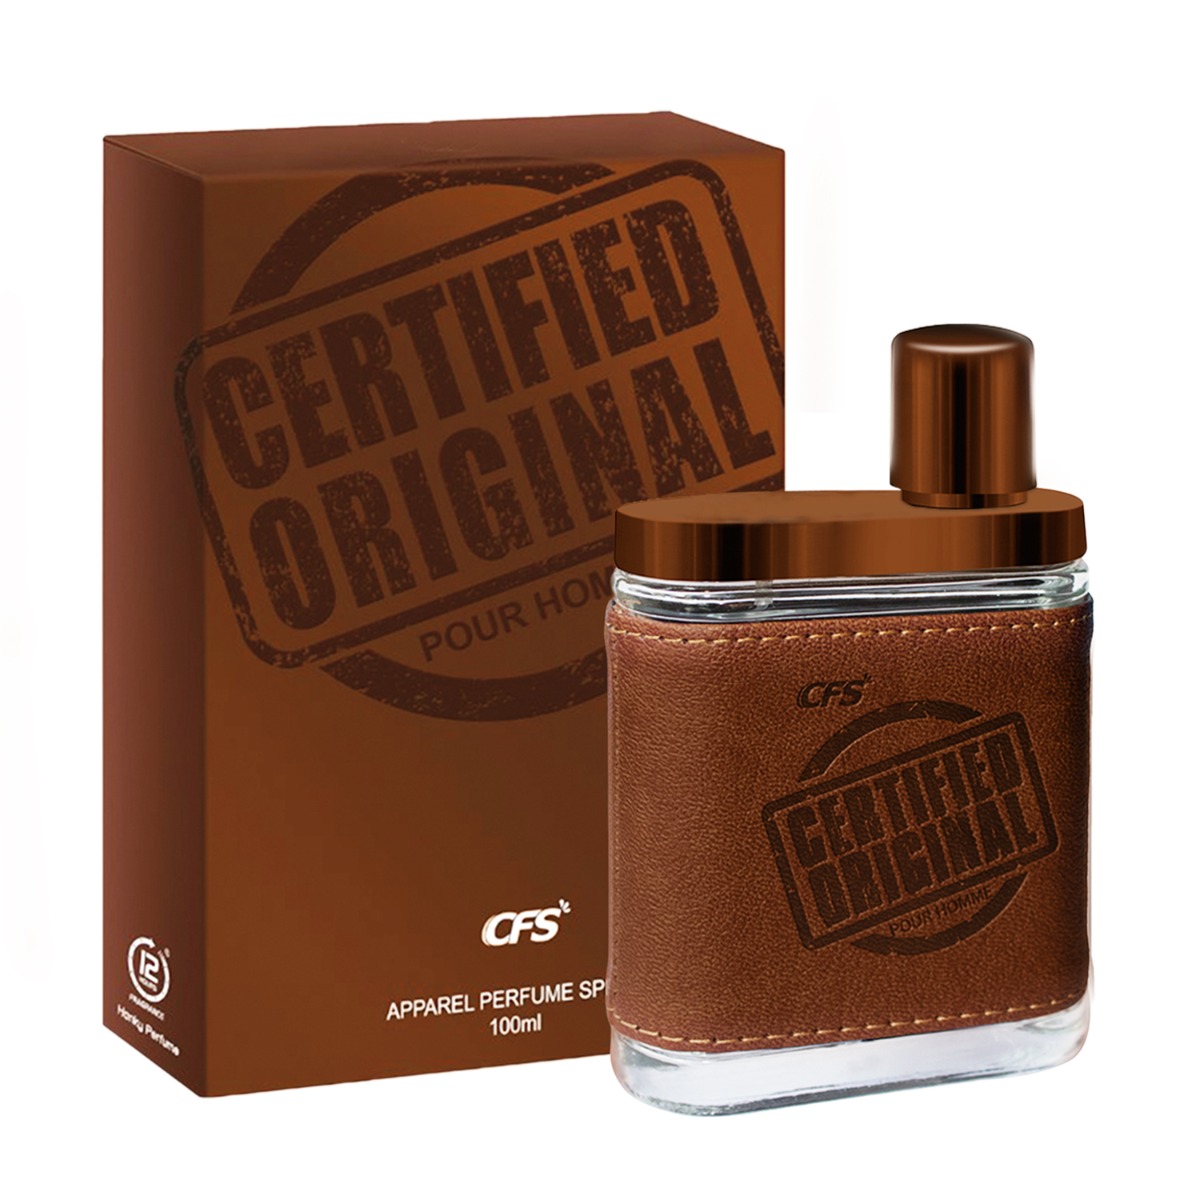 CFS Certified Original Brown Long Lasting Apparel Perfume Spray, 100ml